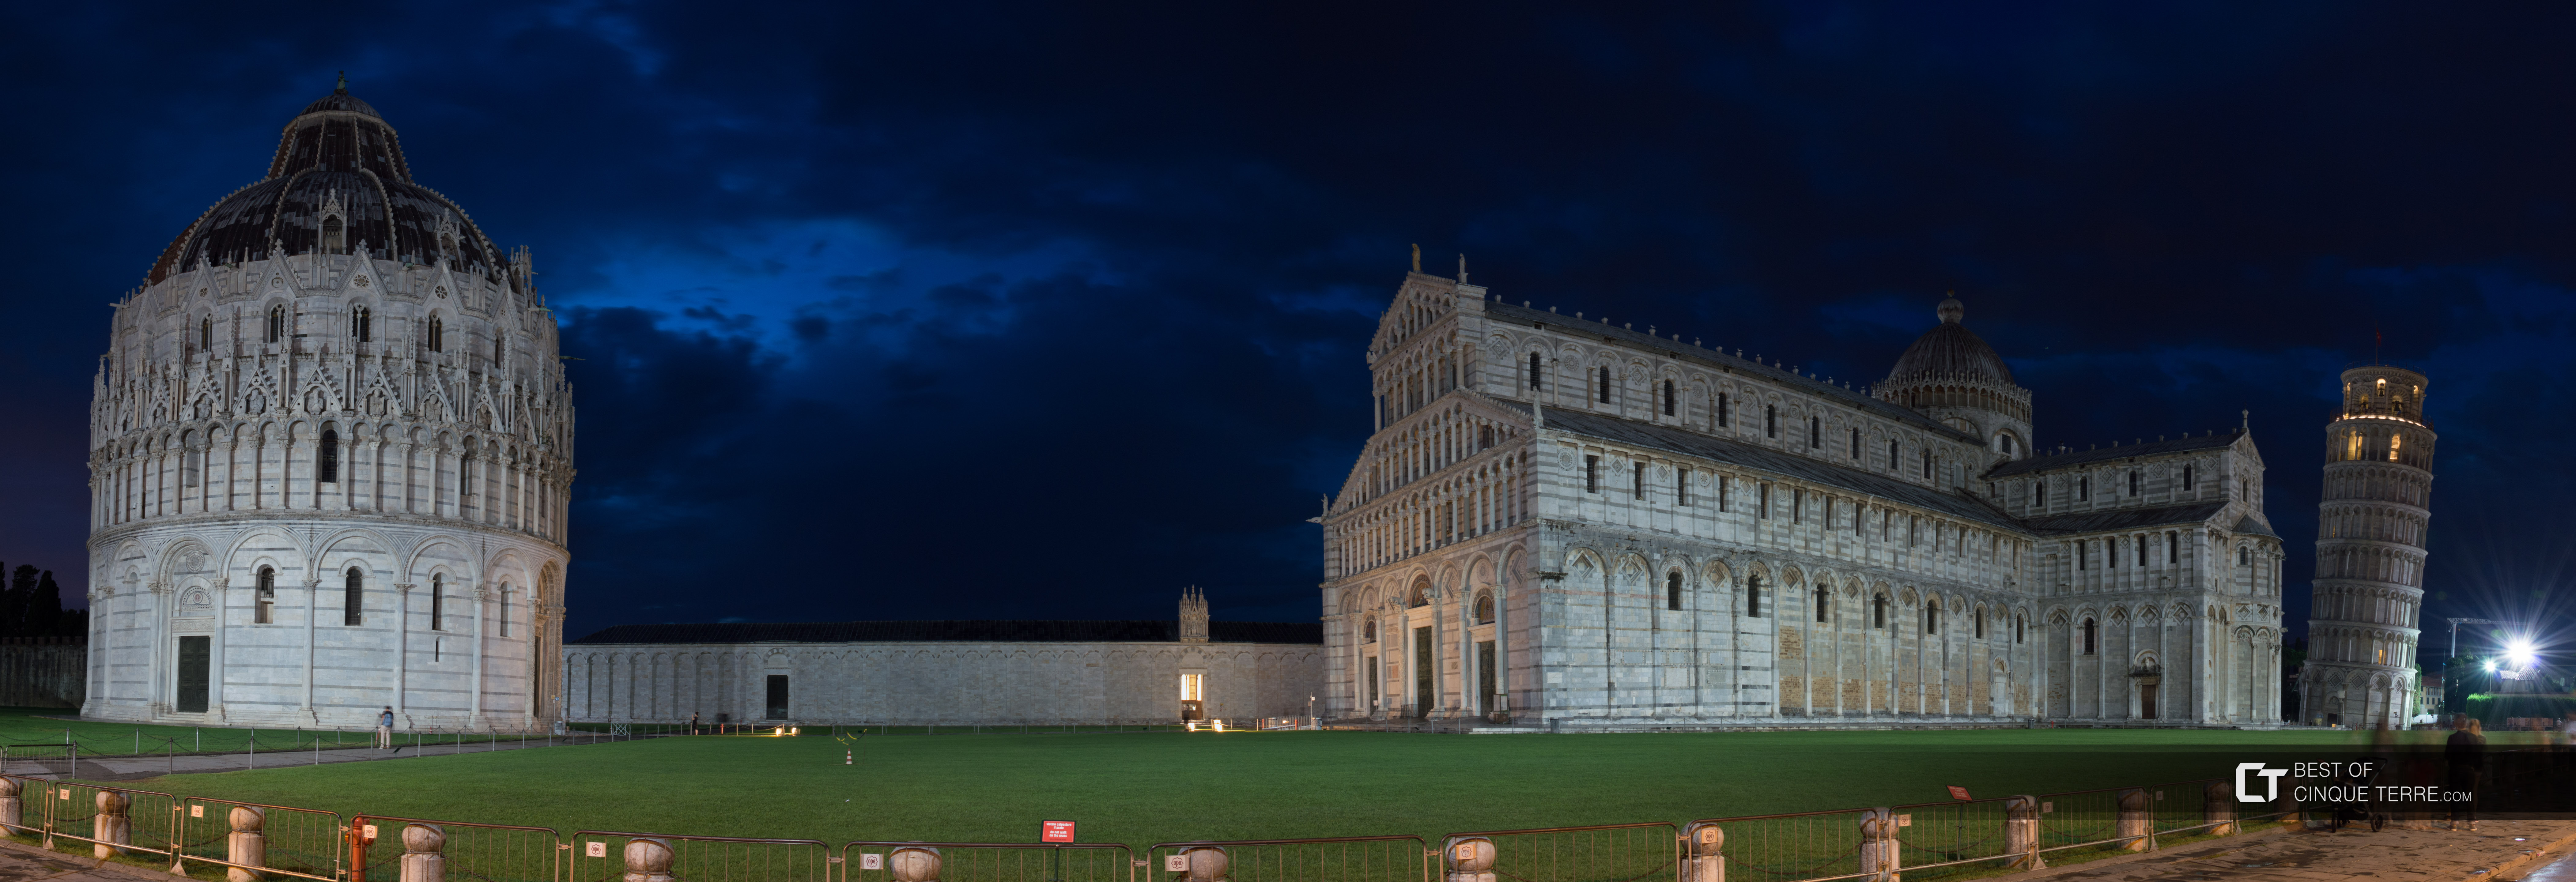 Piazza dei Miracoli, vista panorâmica noturna, Pisa, Itália